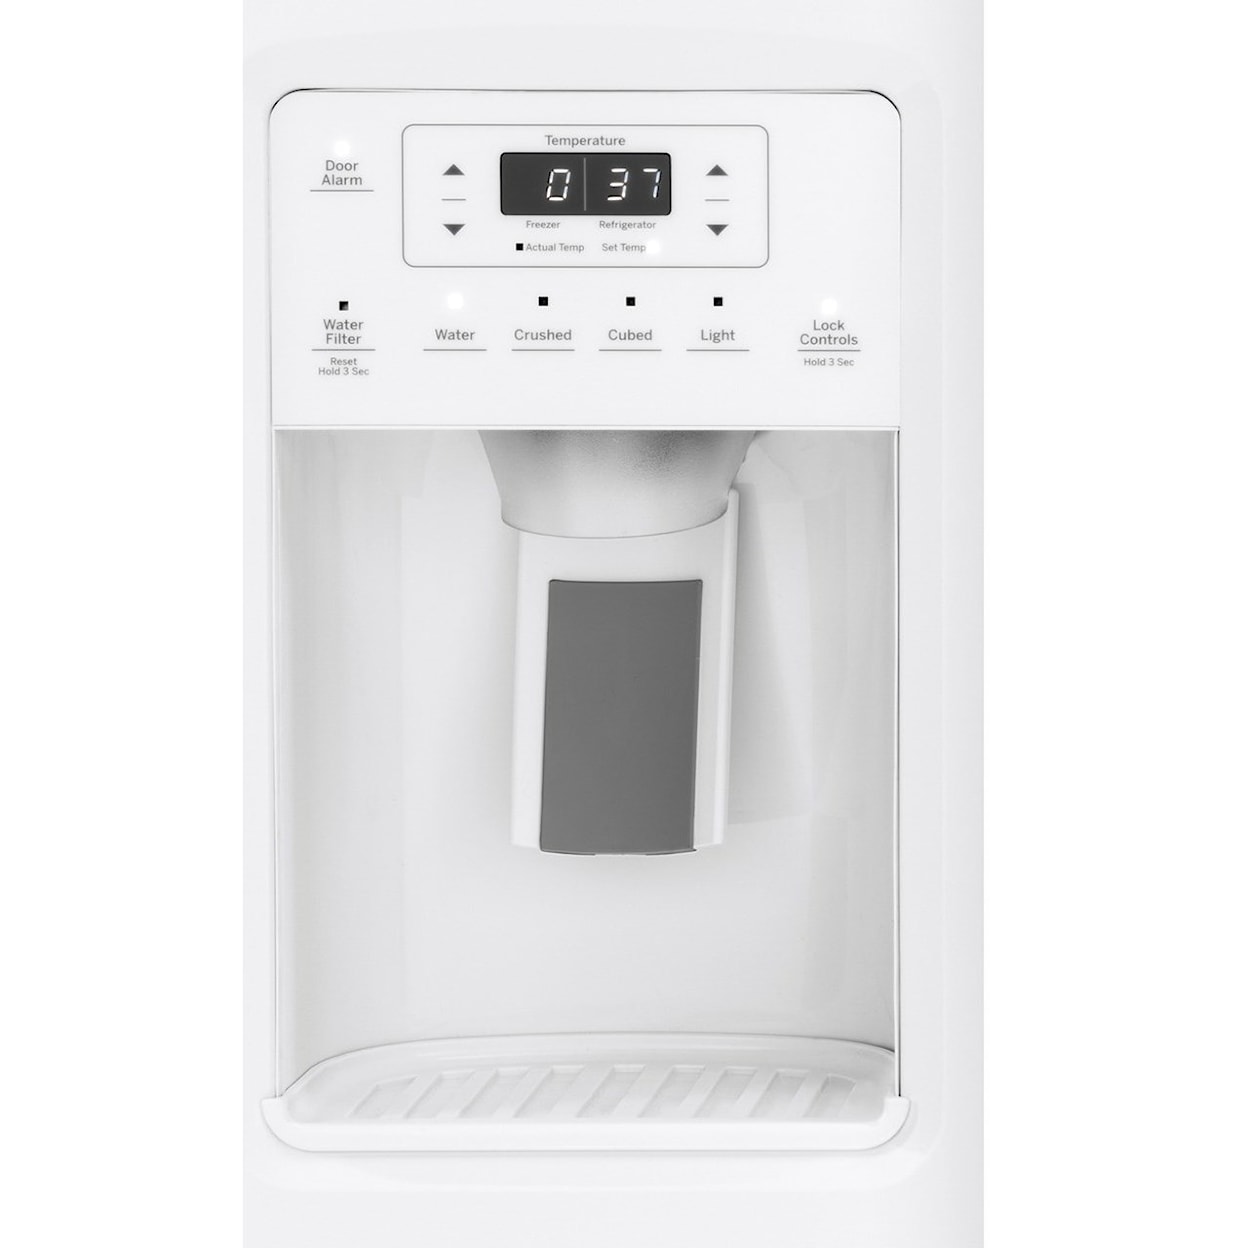 GE Appliances GE Series Side-By-Side Refrigerators GE® 25.3 Cu. Ft. Side-By-Side Refrigerator